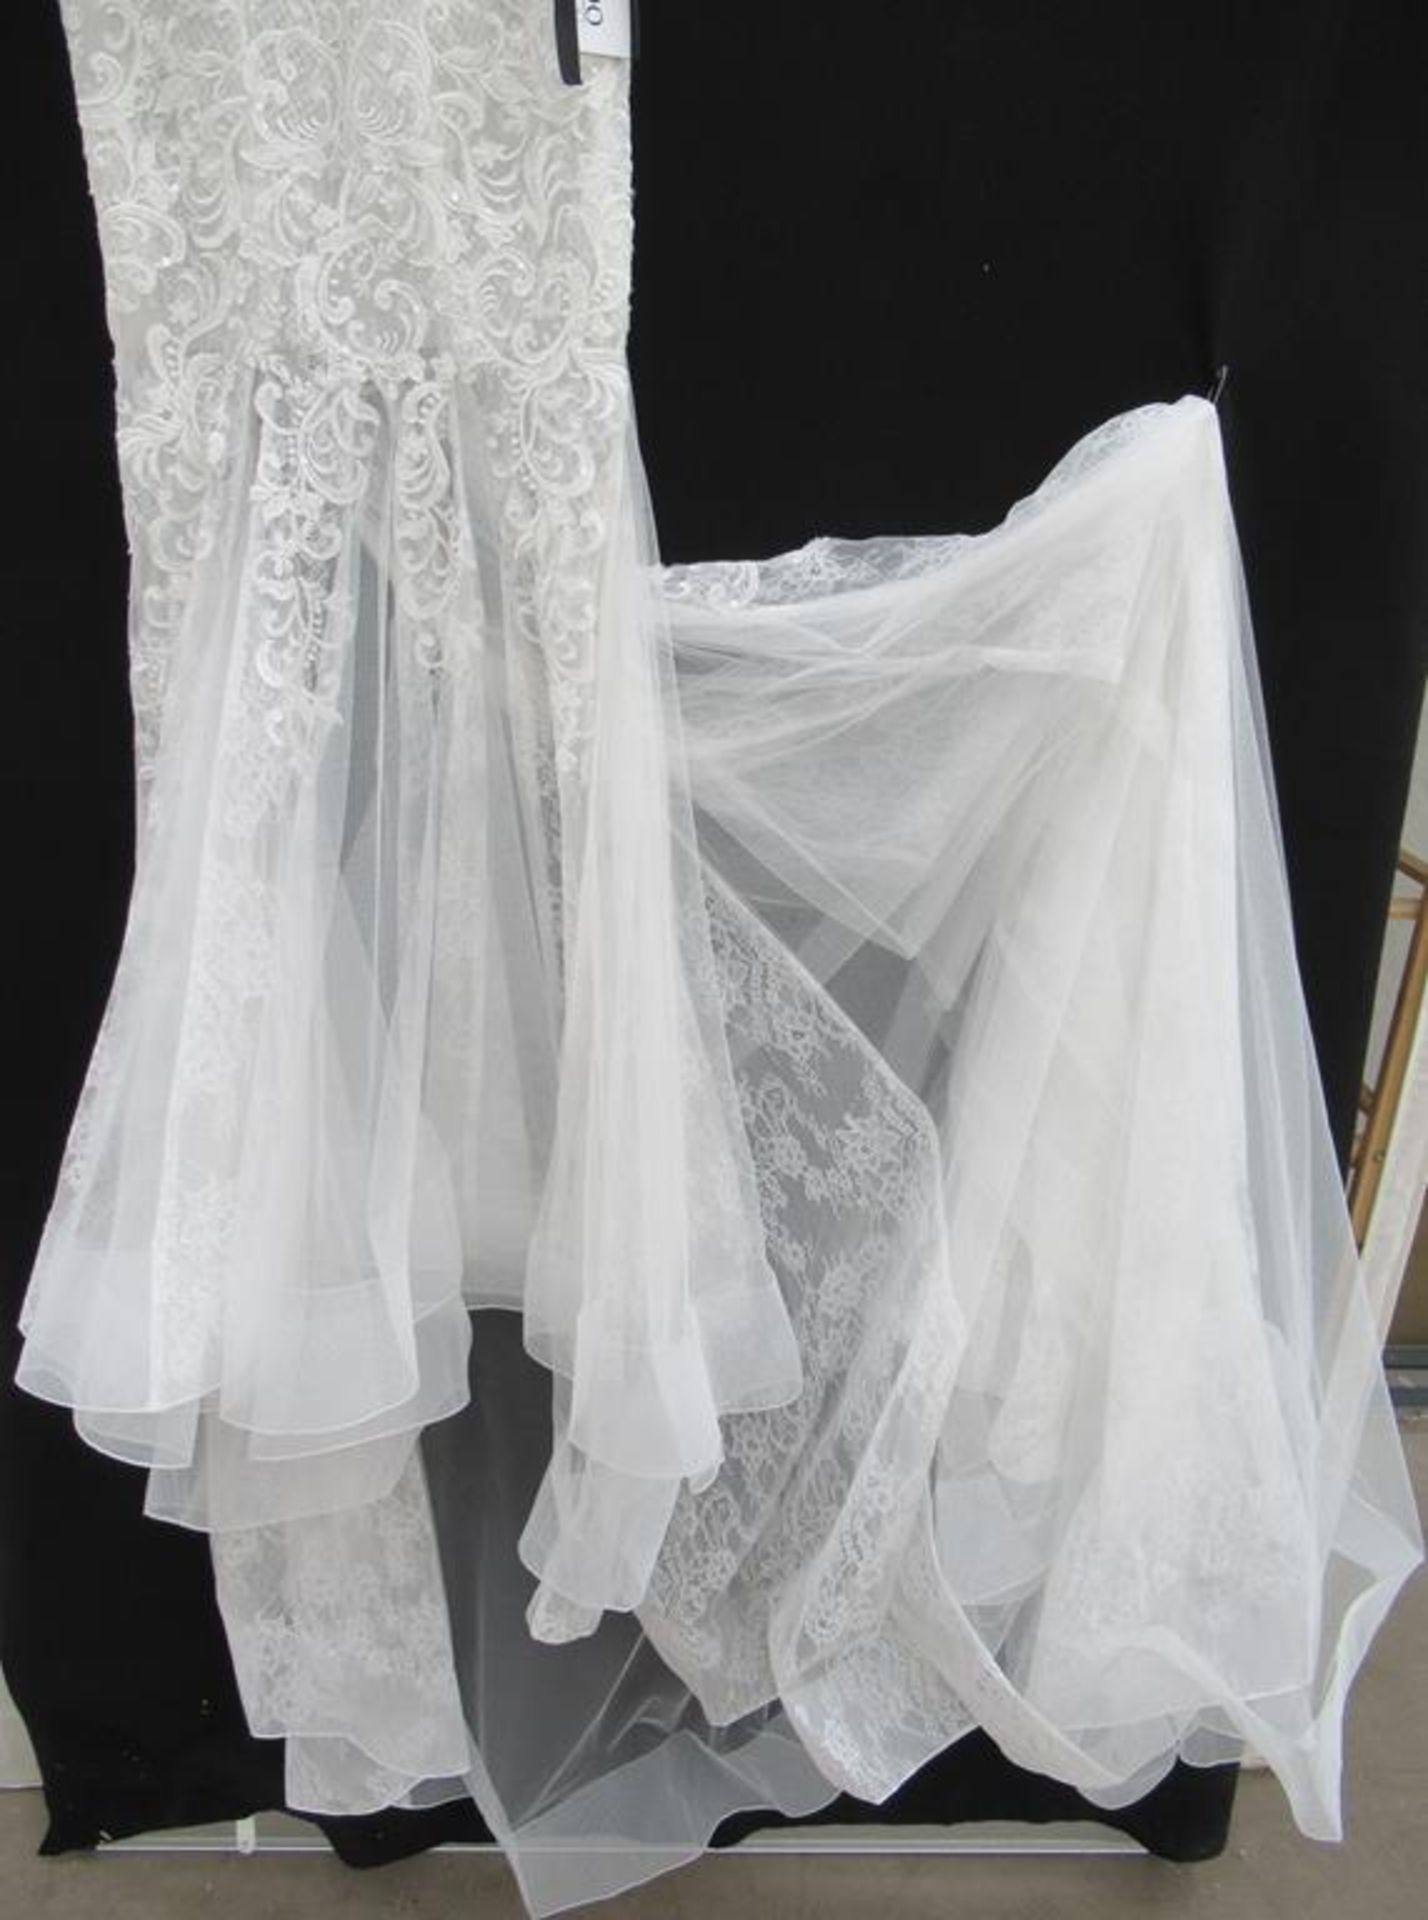 DandoLondon 'Love' wedding dress - Image 3 of 3